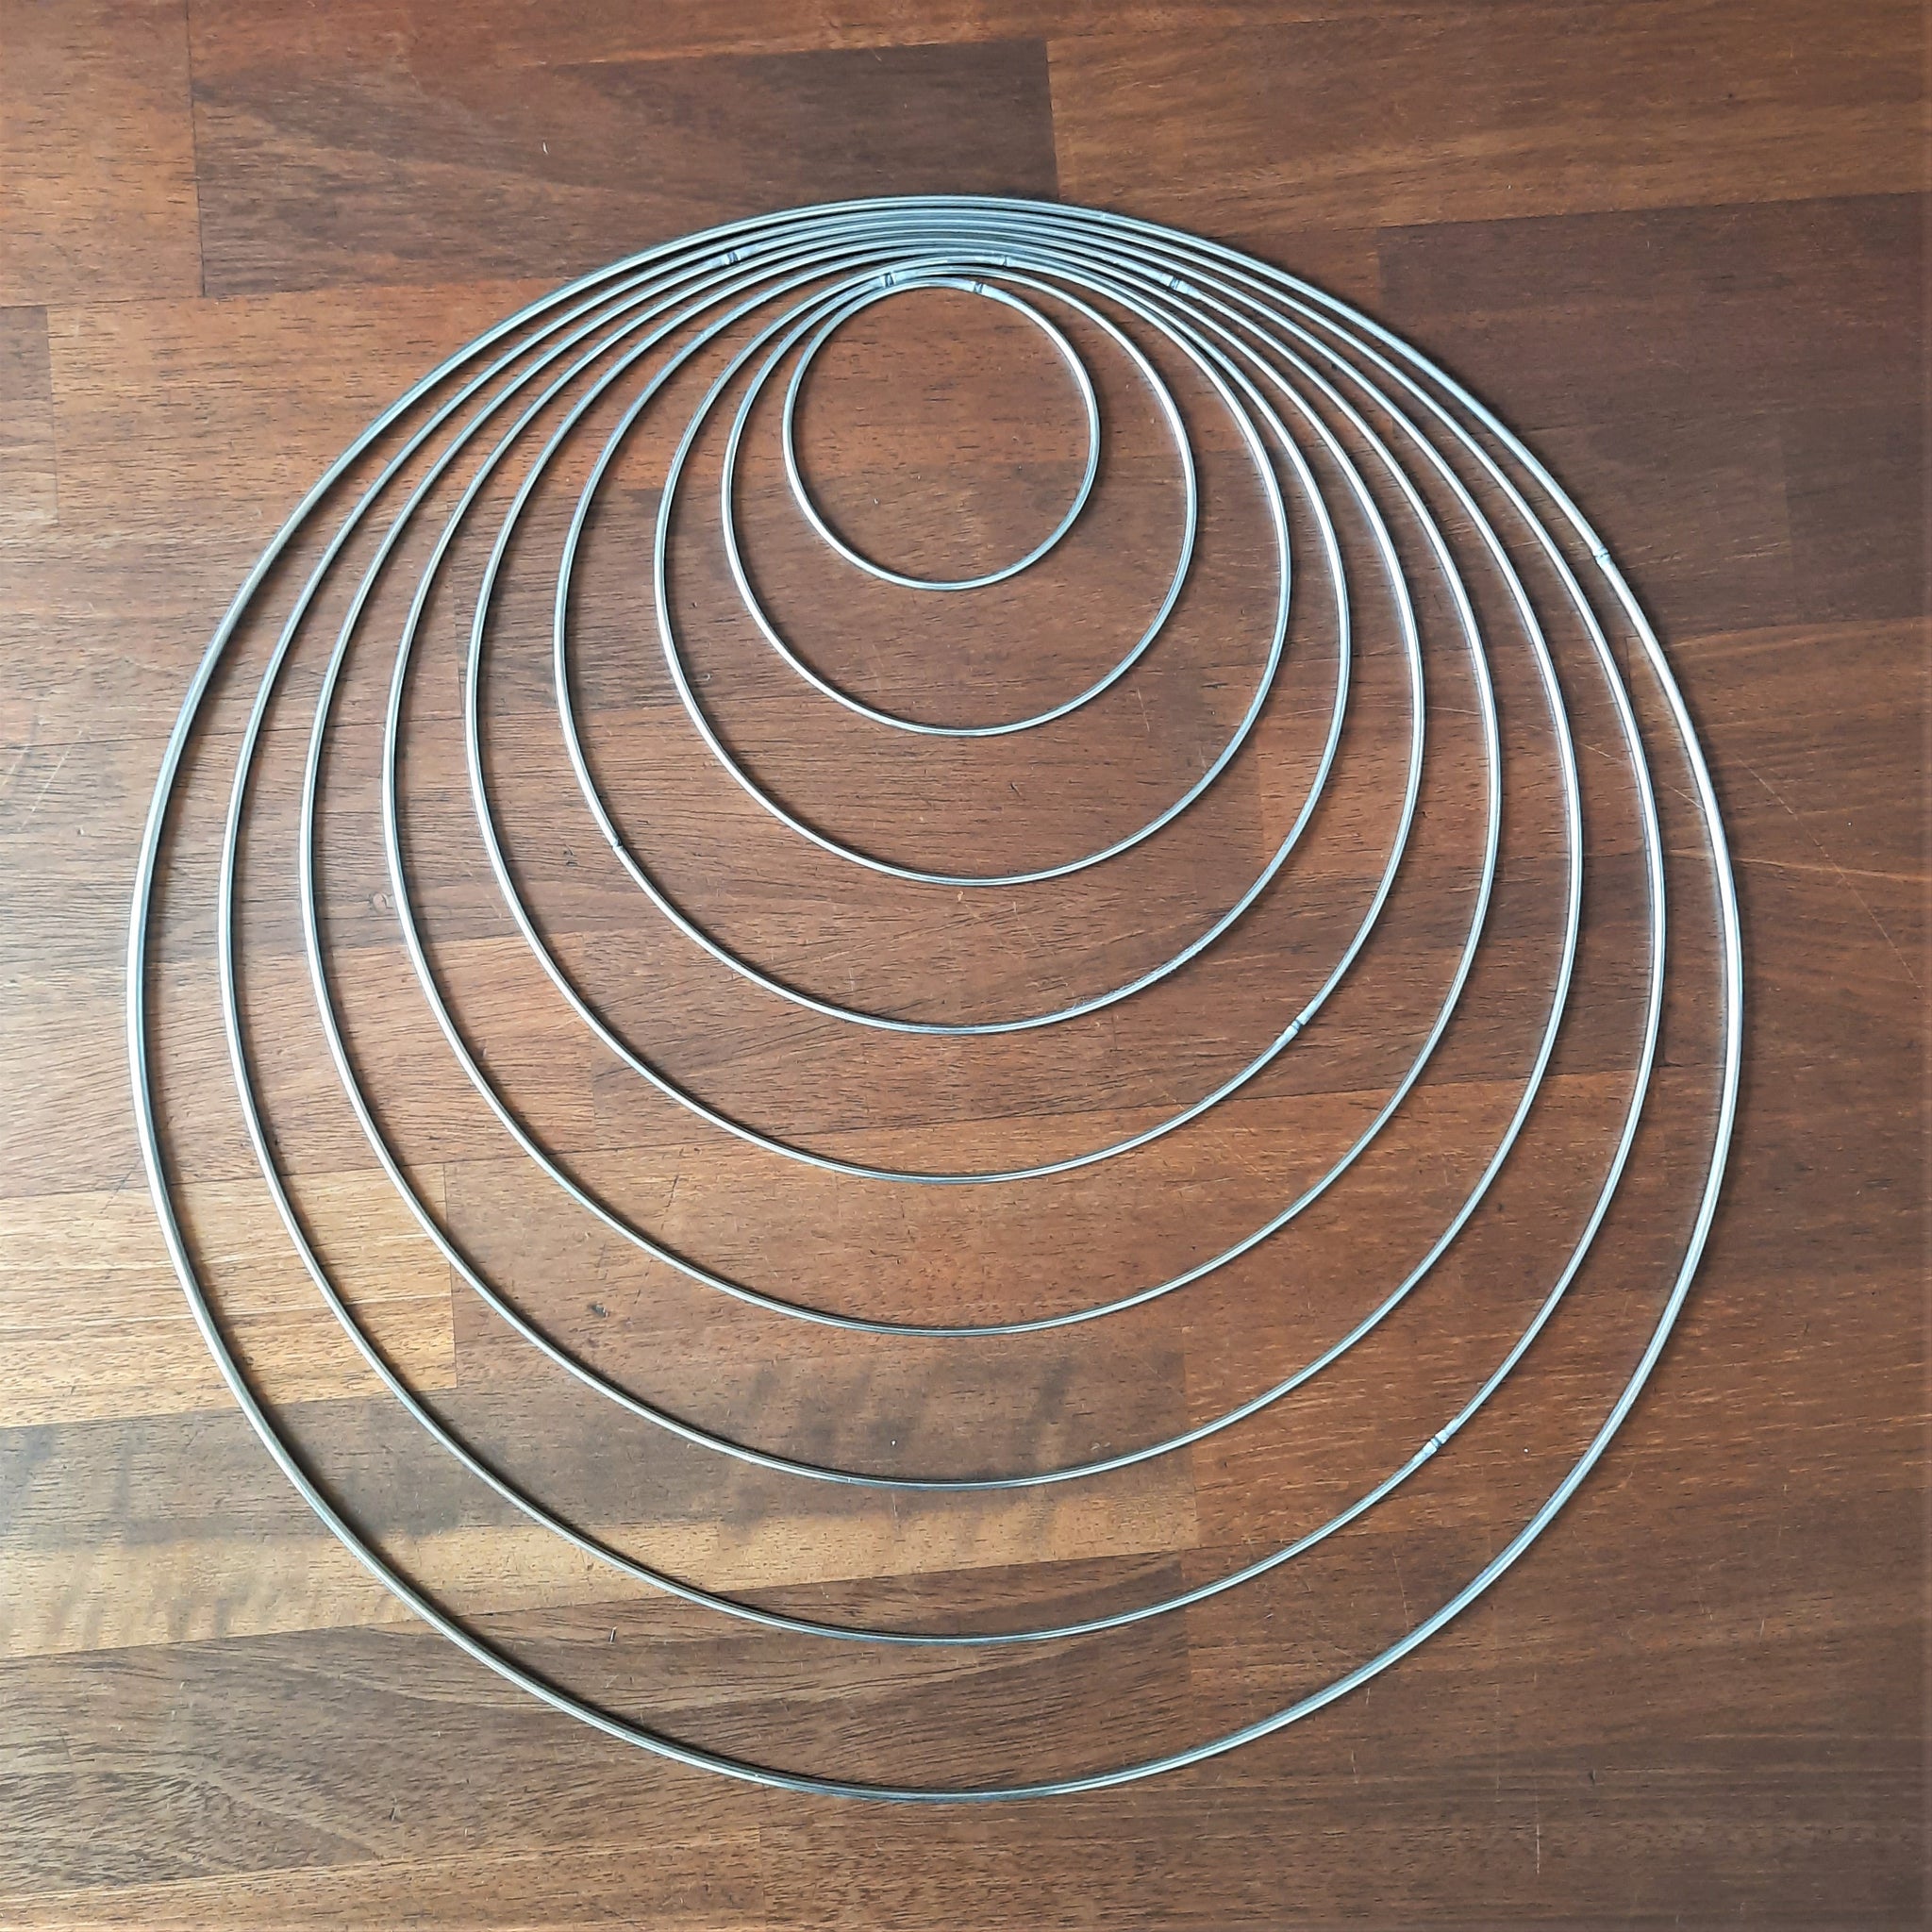 35cm diameter mandala ring - It's all in a nutshell